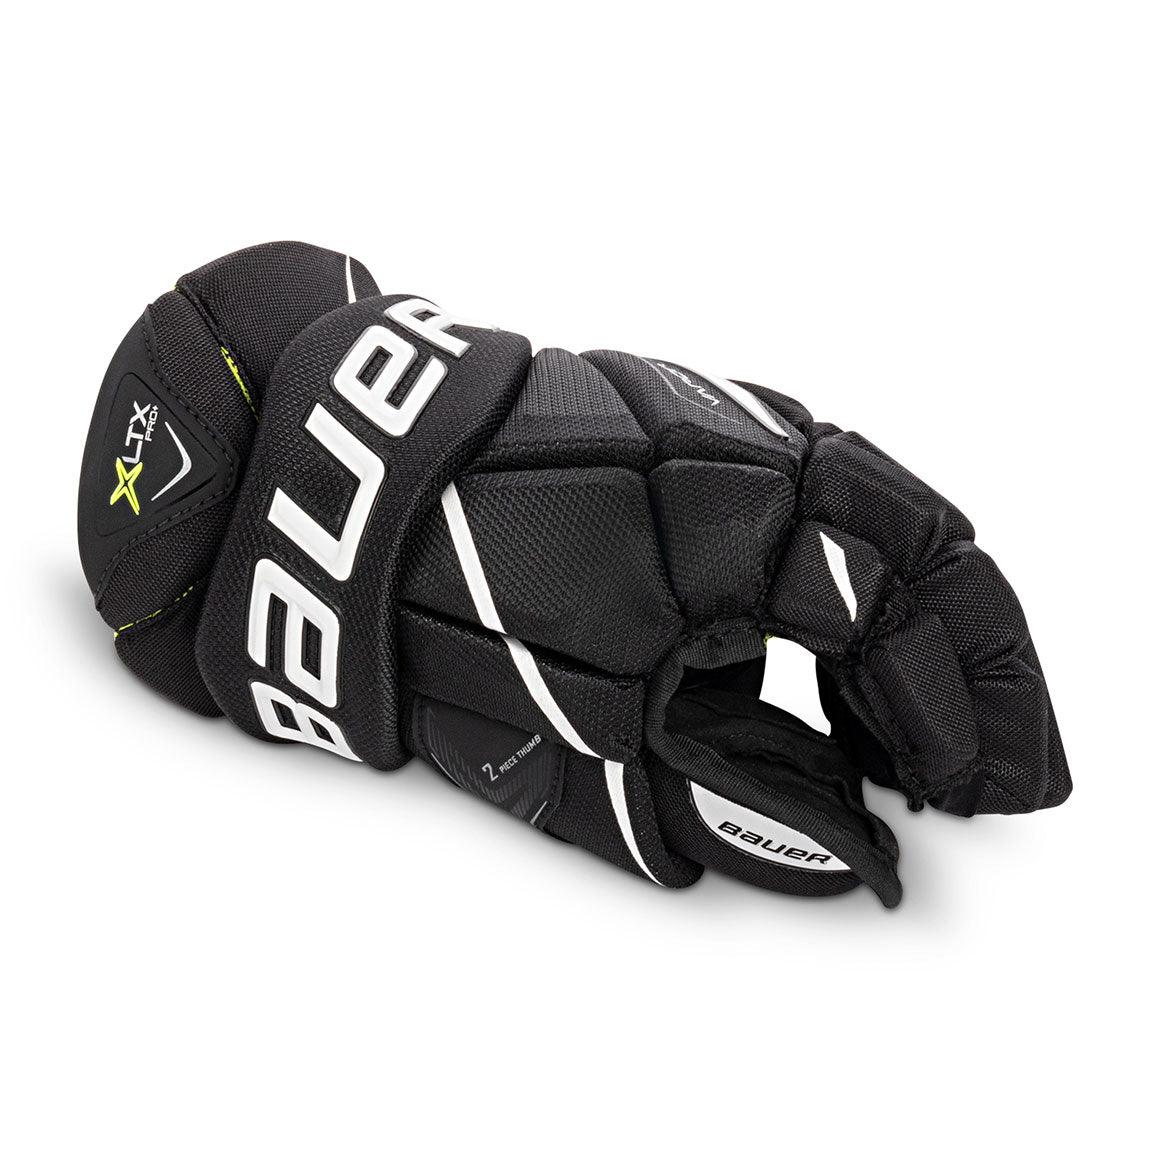 Vapor XLTX Pro+ Gloves - Junior - Sports Excellence